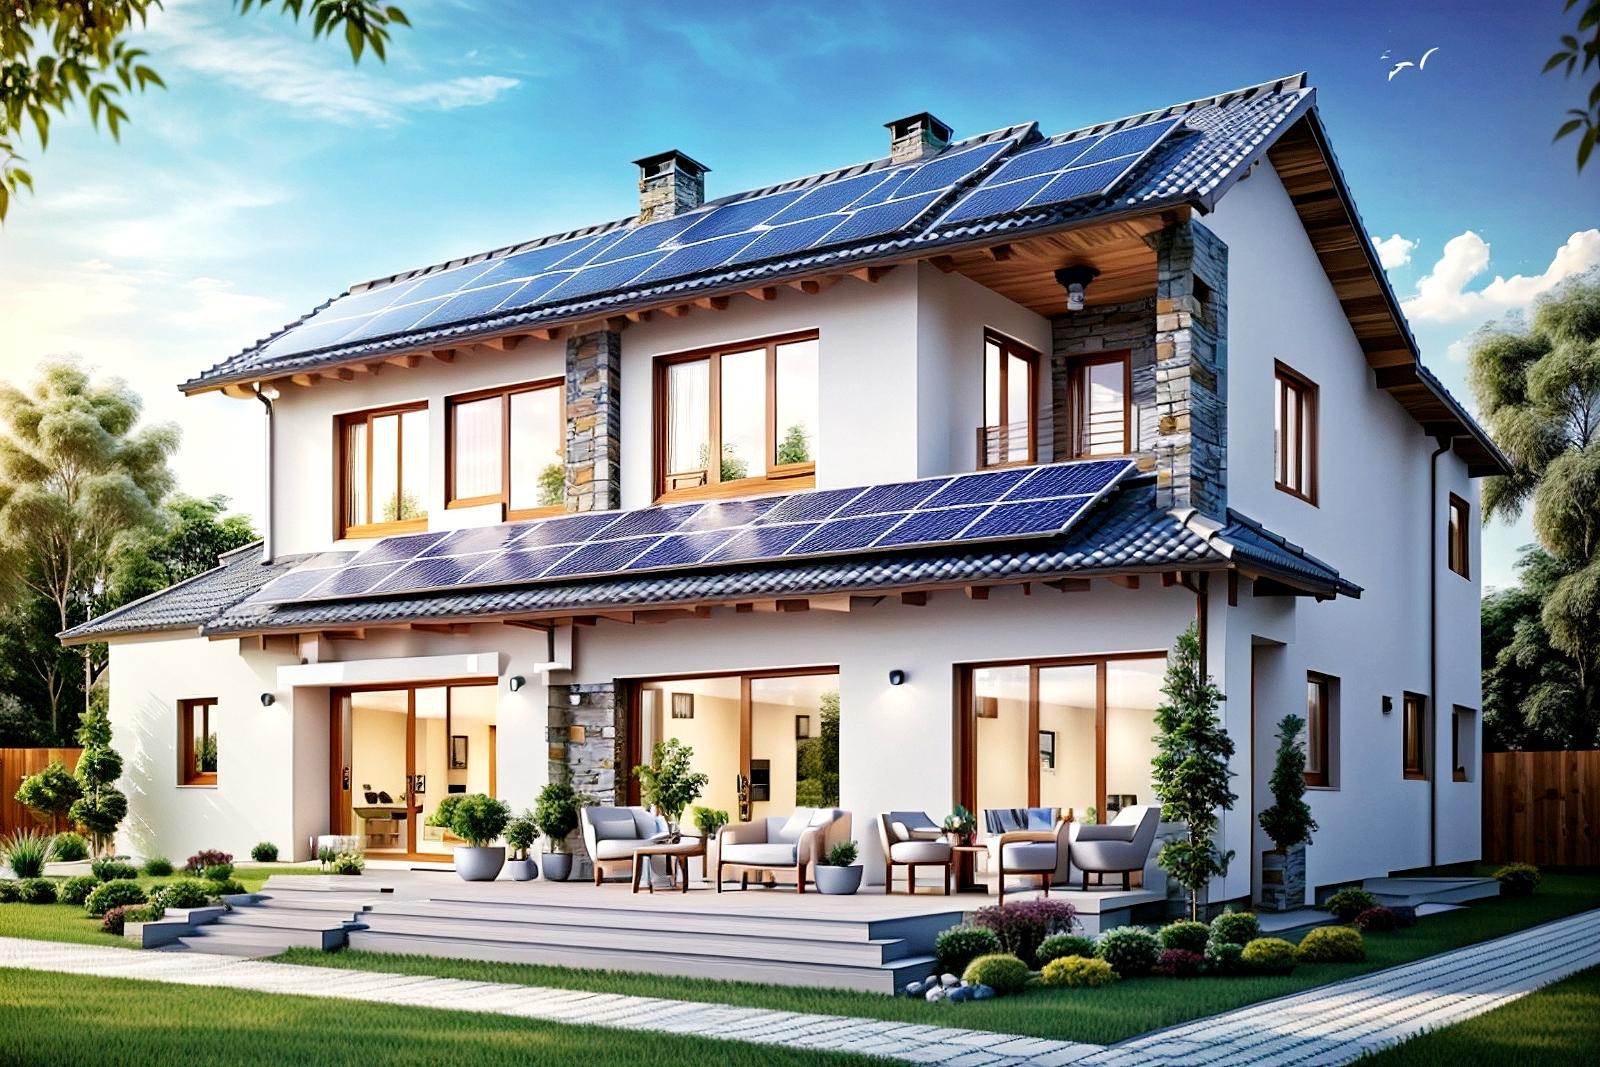 Energy-Efficient Home Upgrades